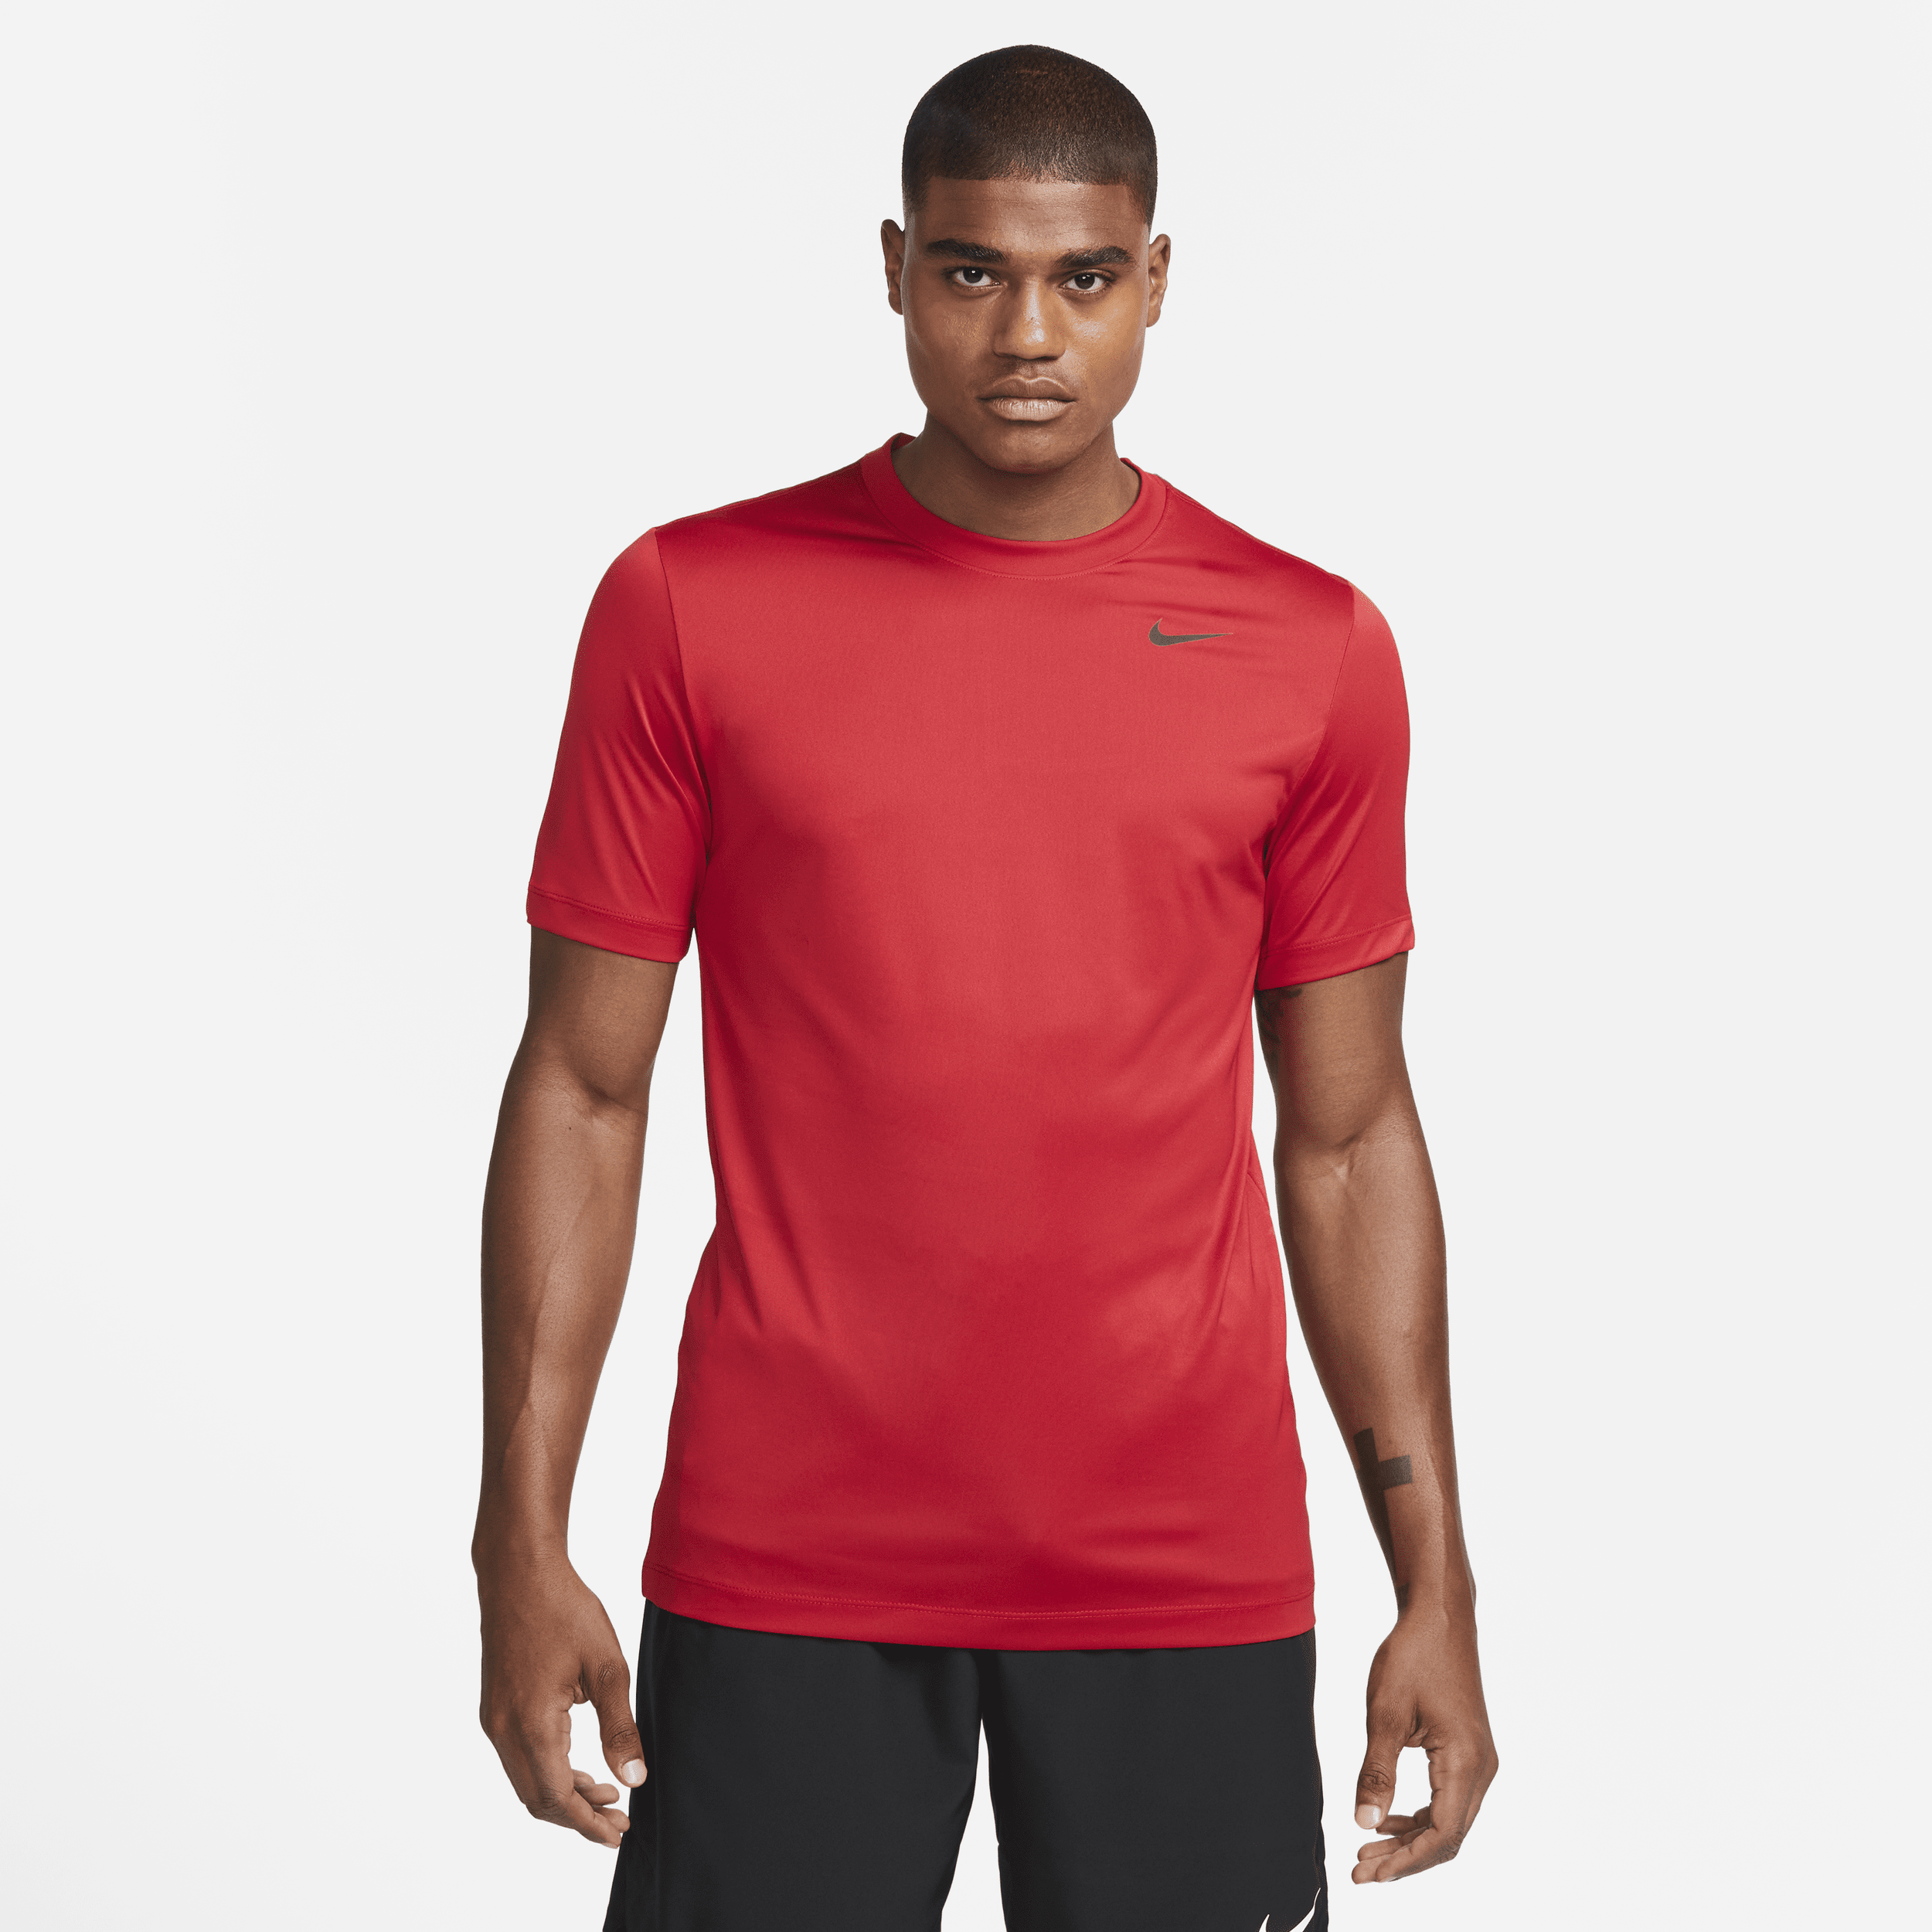 Nike Men's Dri-fit Legend Fitness T-shirt In Red